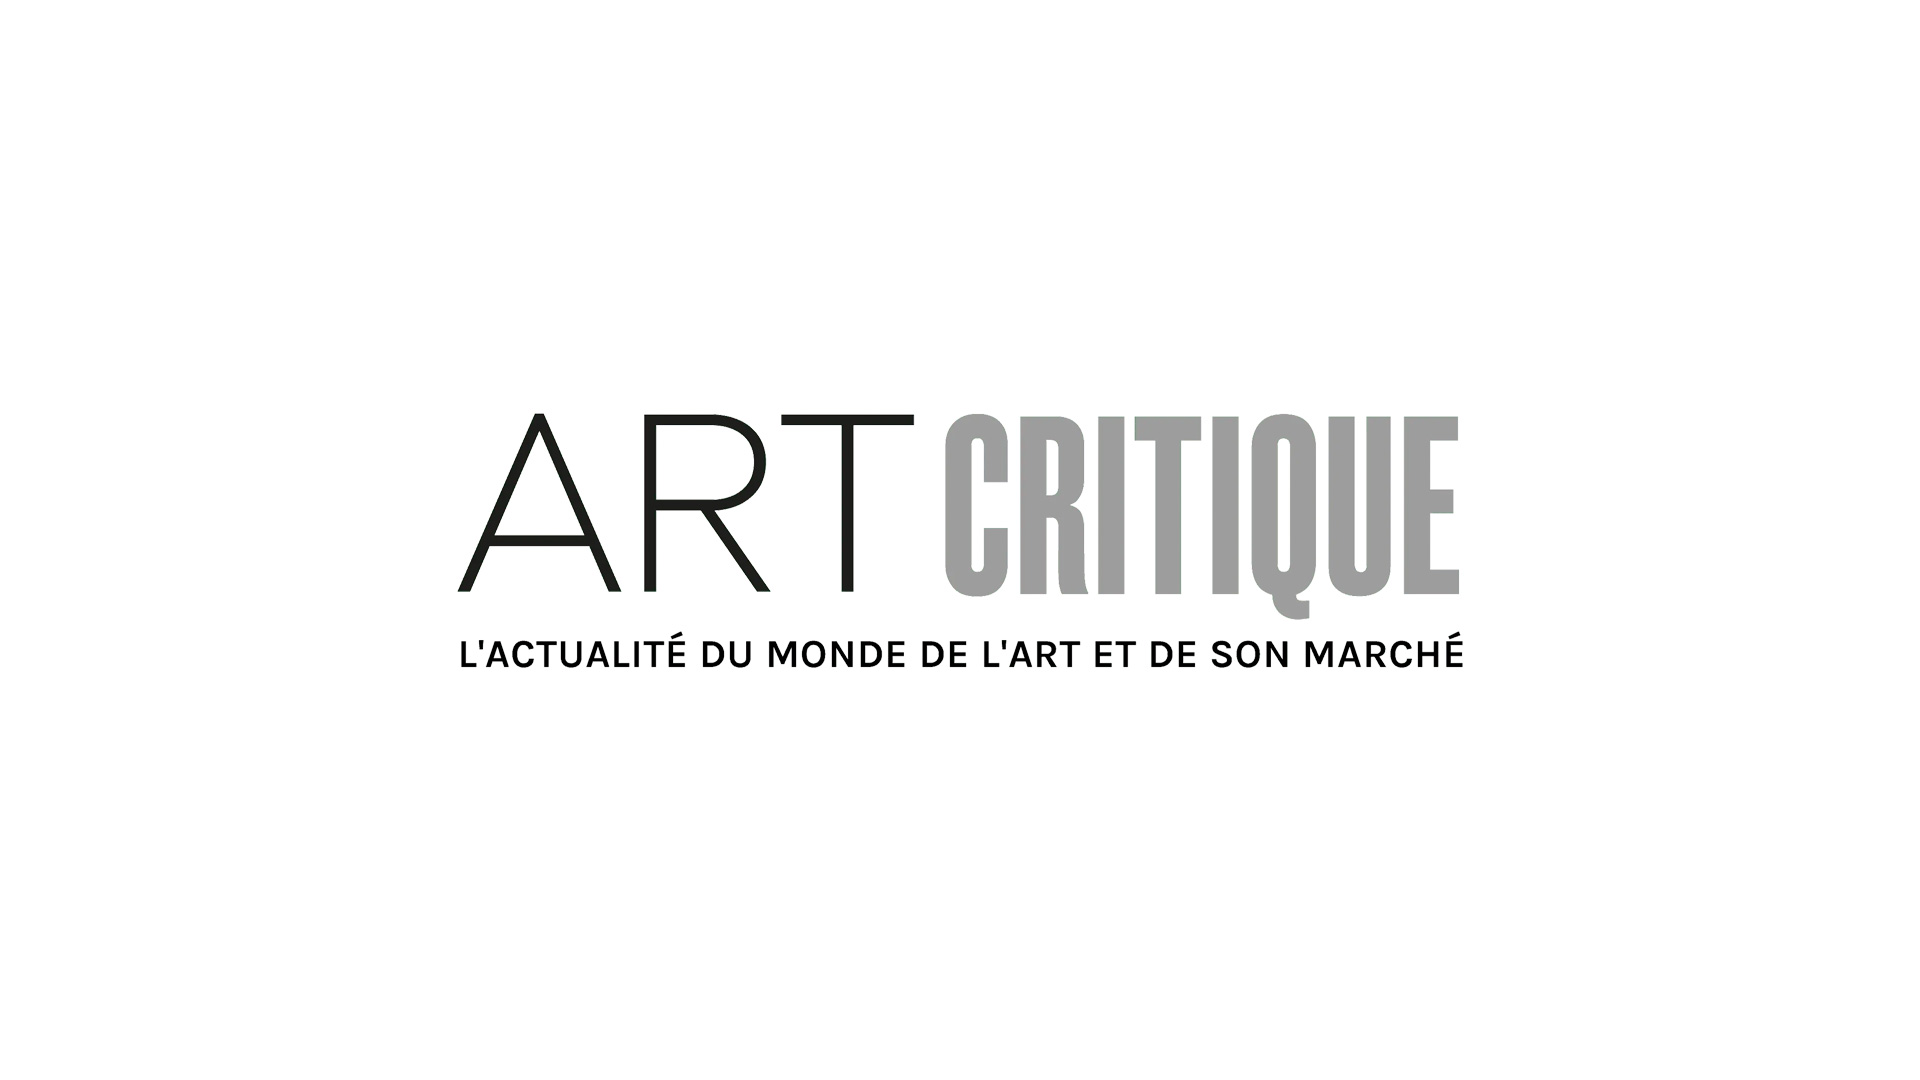 Nalini Malani receives the 2019 Joan Miró Prize